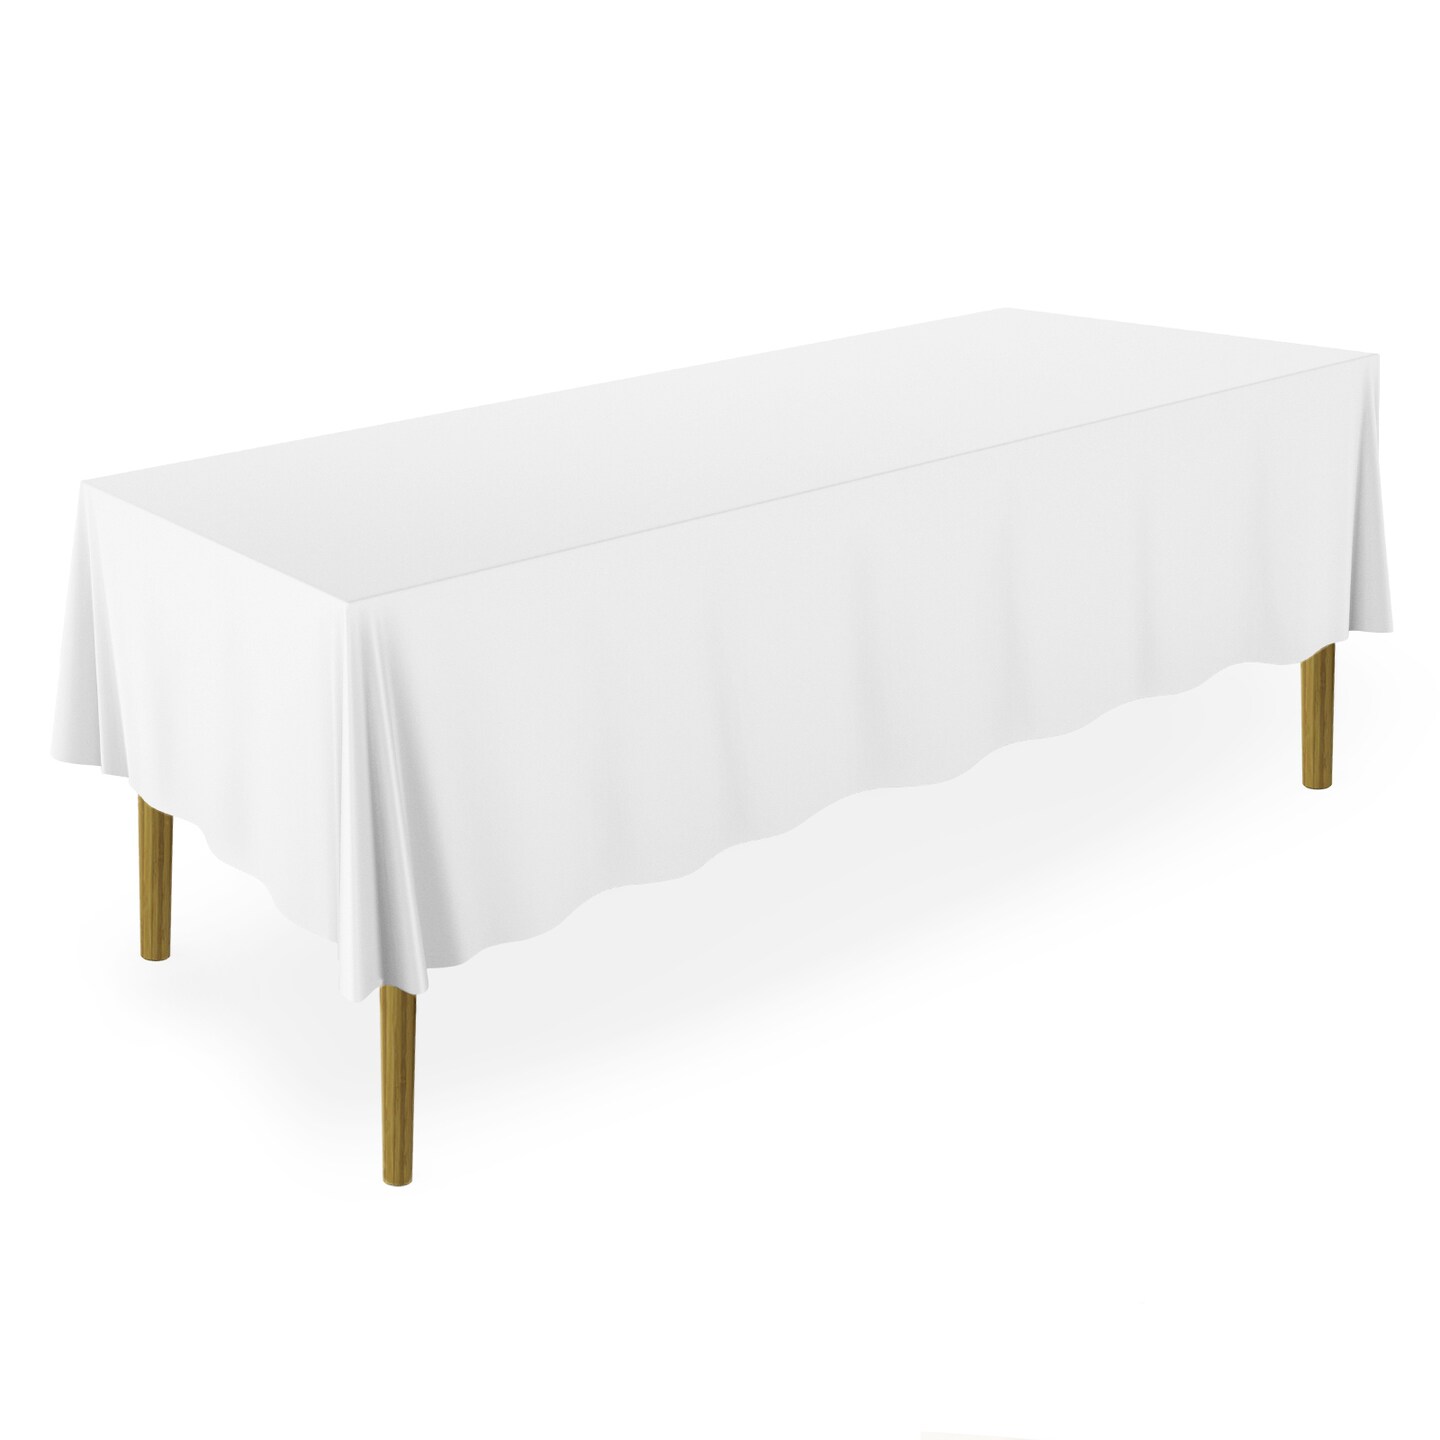 Lann's Linens - 5 Premium Tablecloths for Wedding/Banquet/Restaurant - Rectangular Polyester Fabric Table Cloths